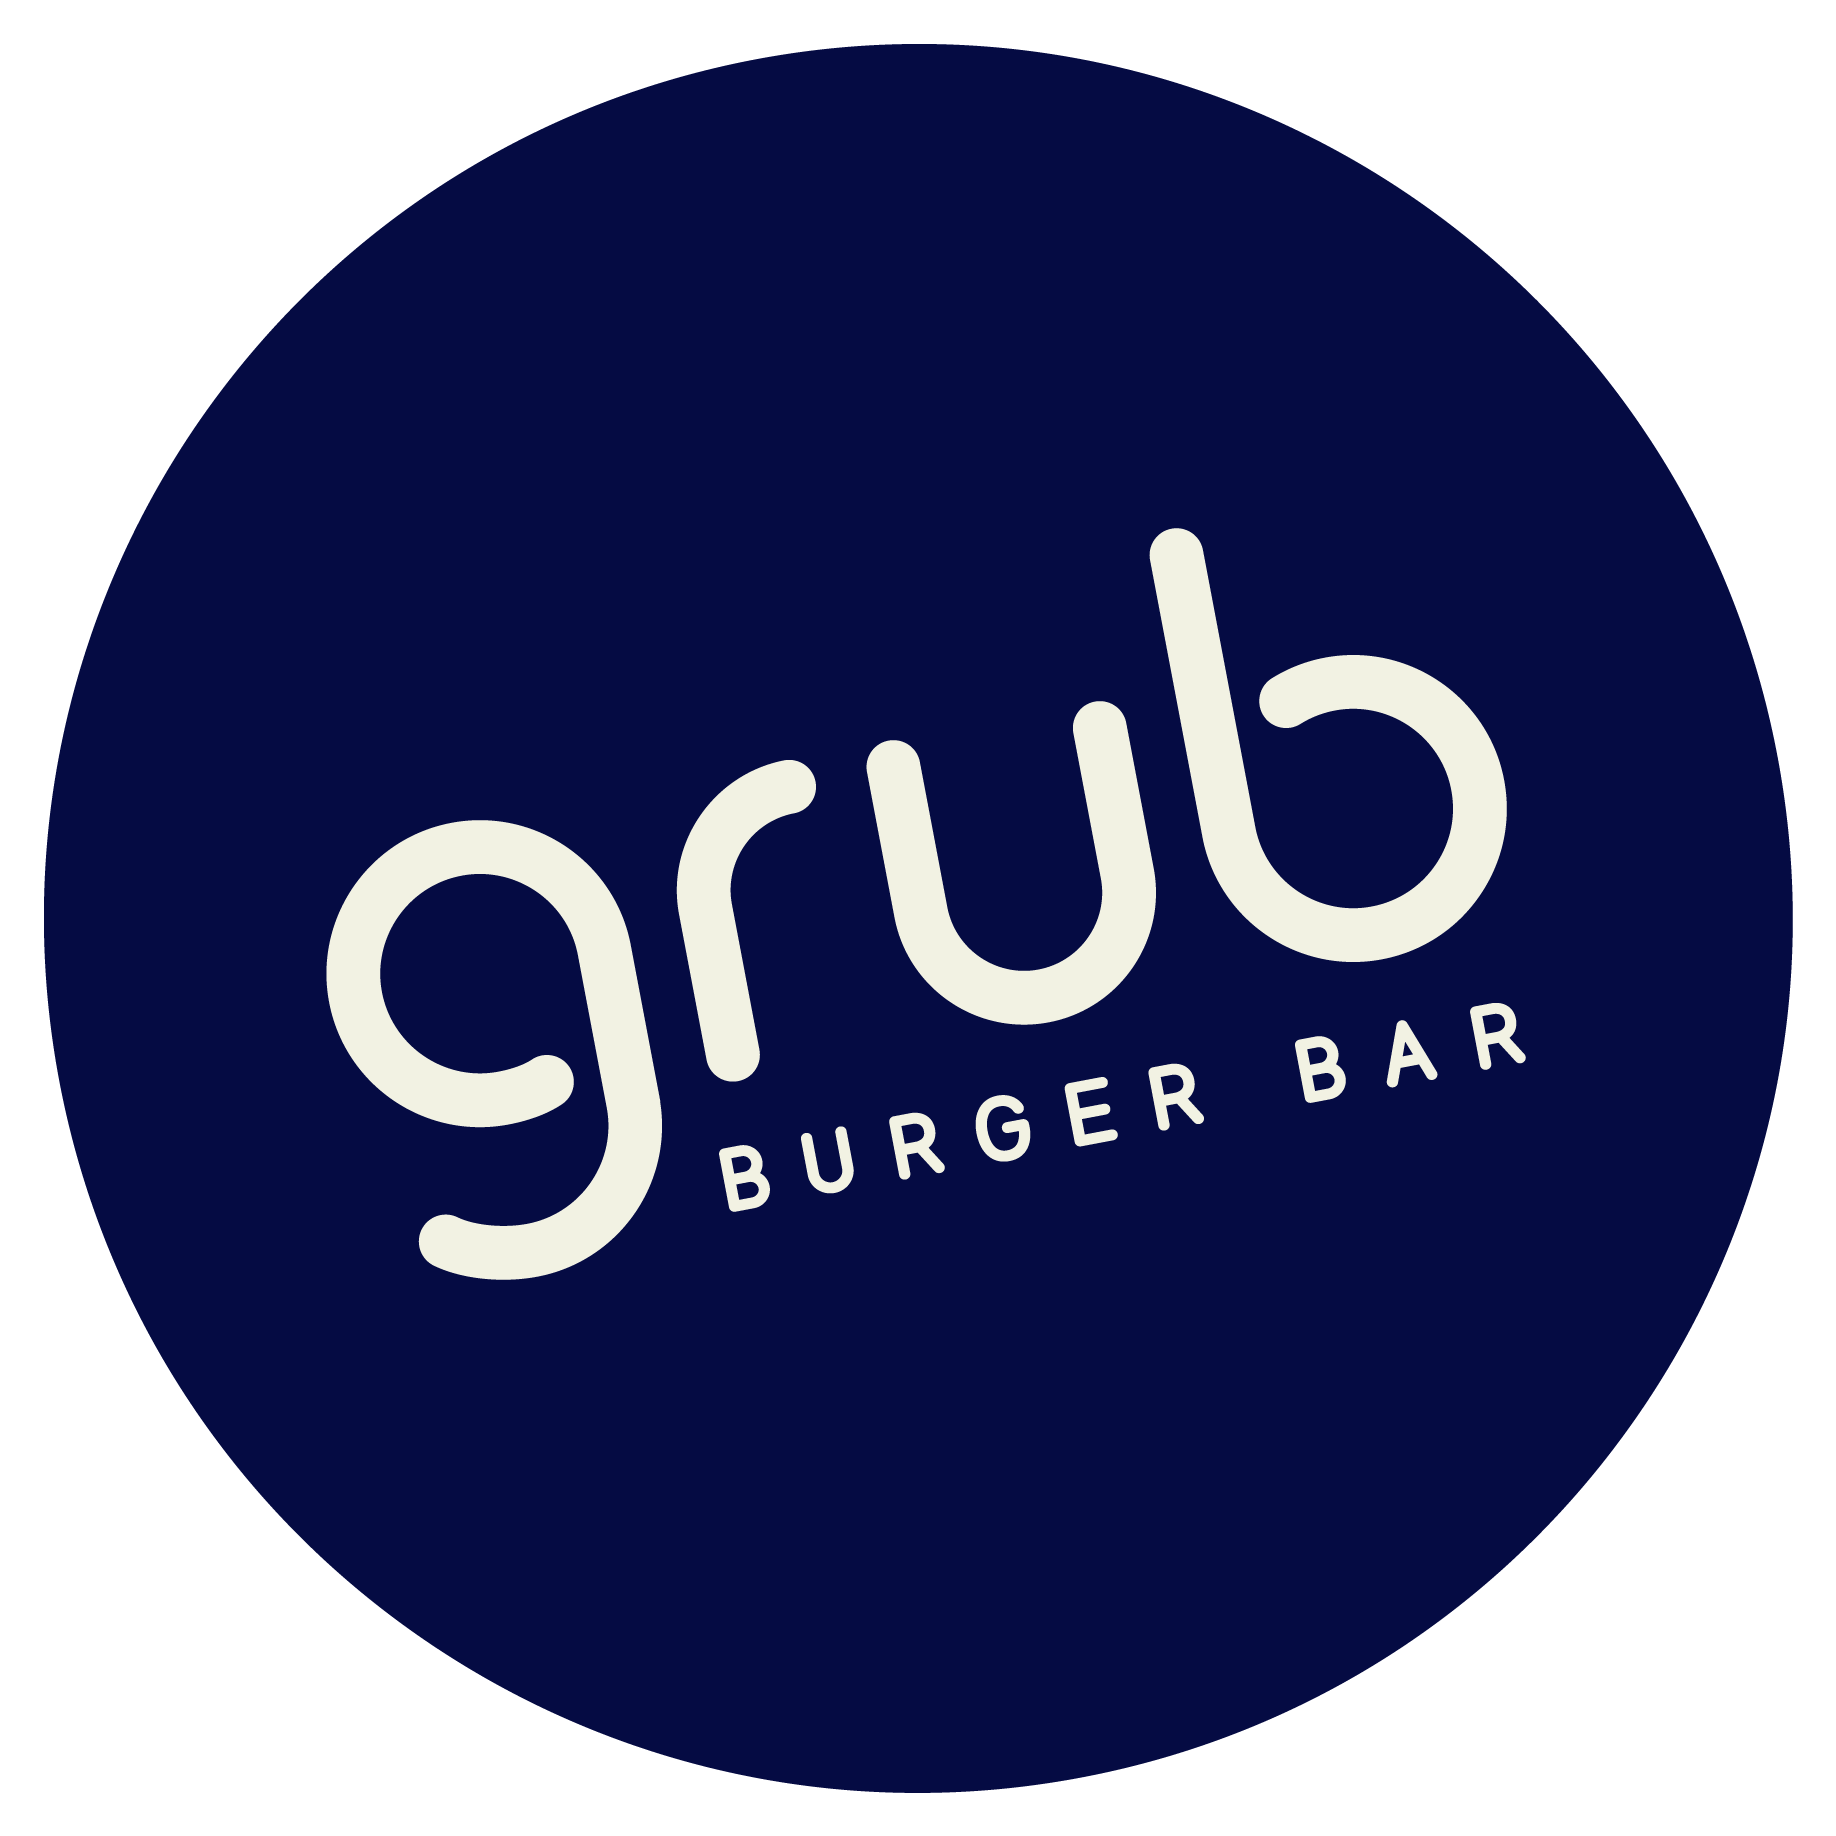 All Burger Places Logo - Grub Burger Bar, Shakes, Cocktails, and Life